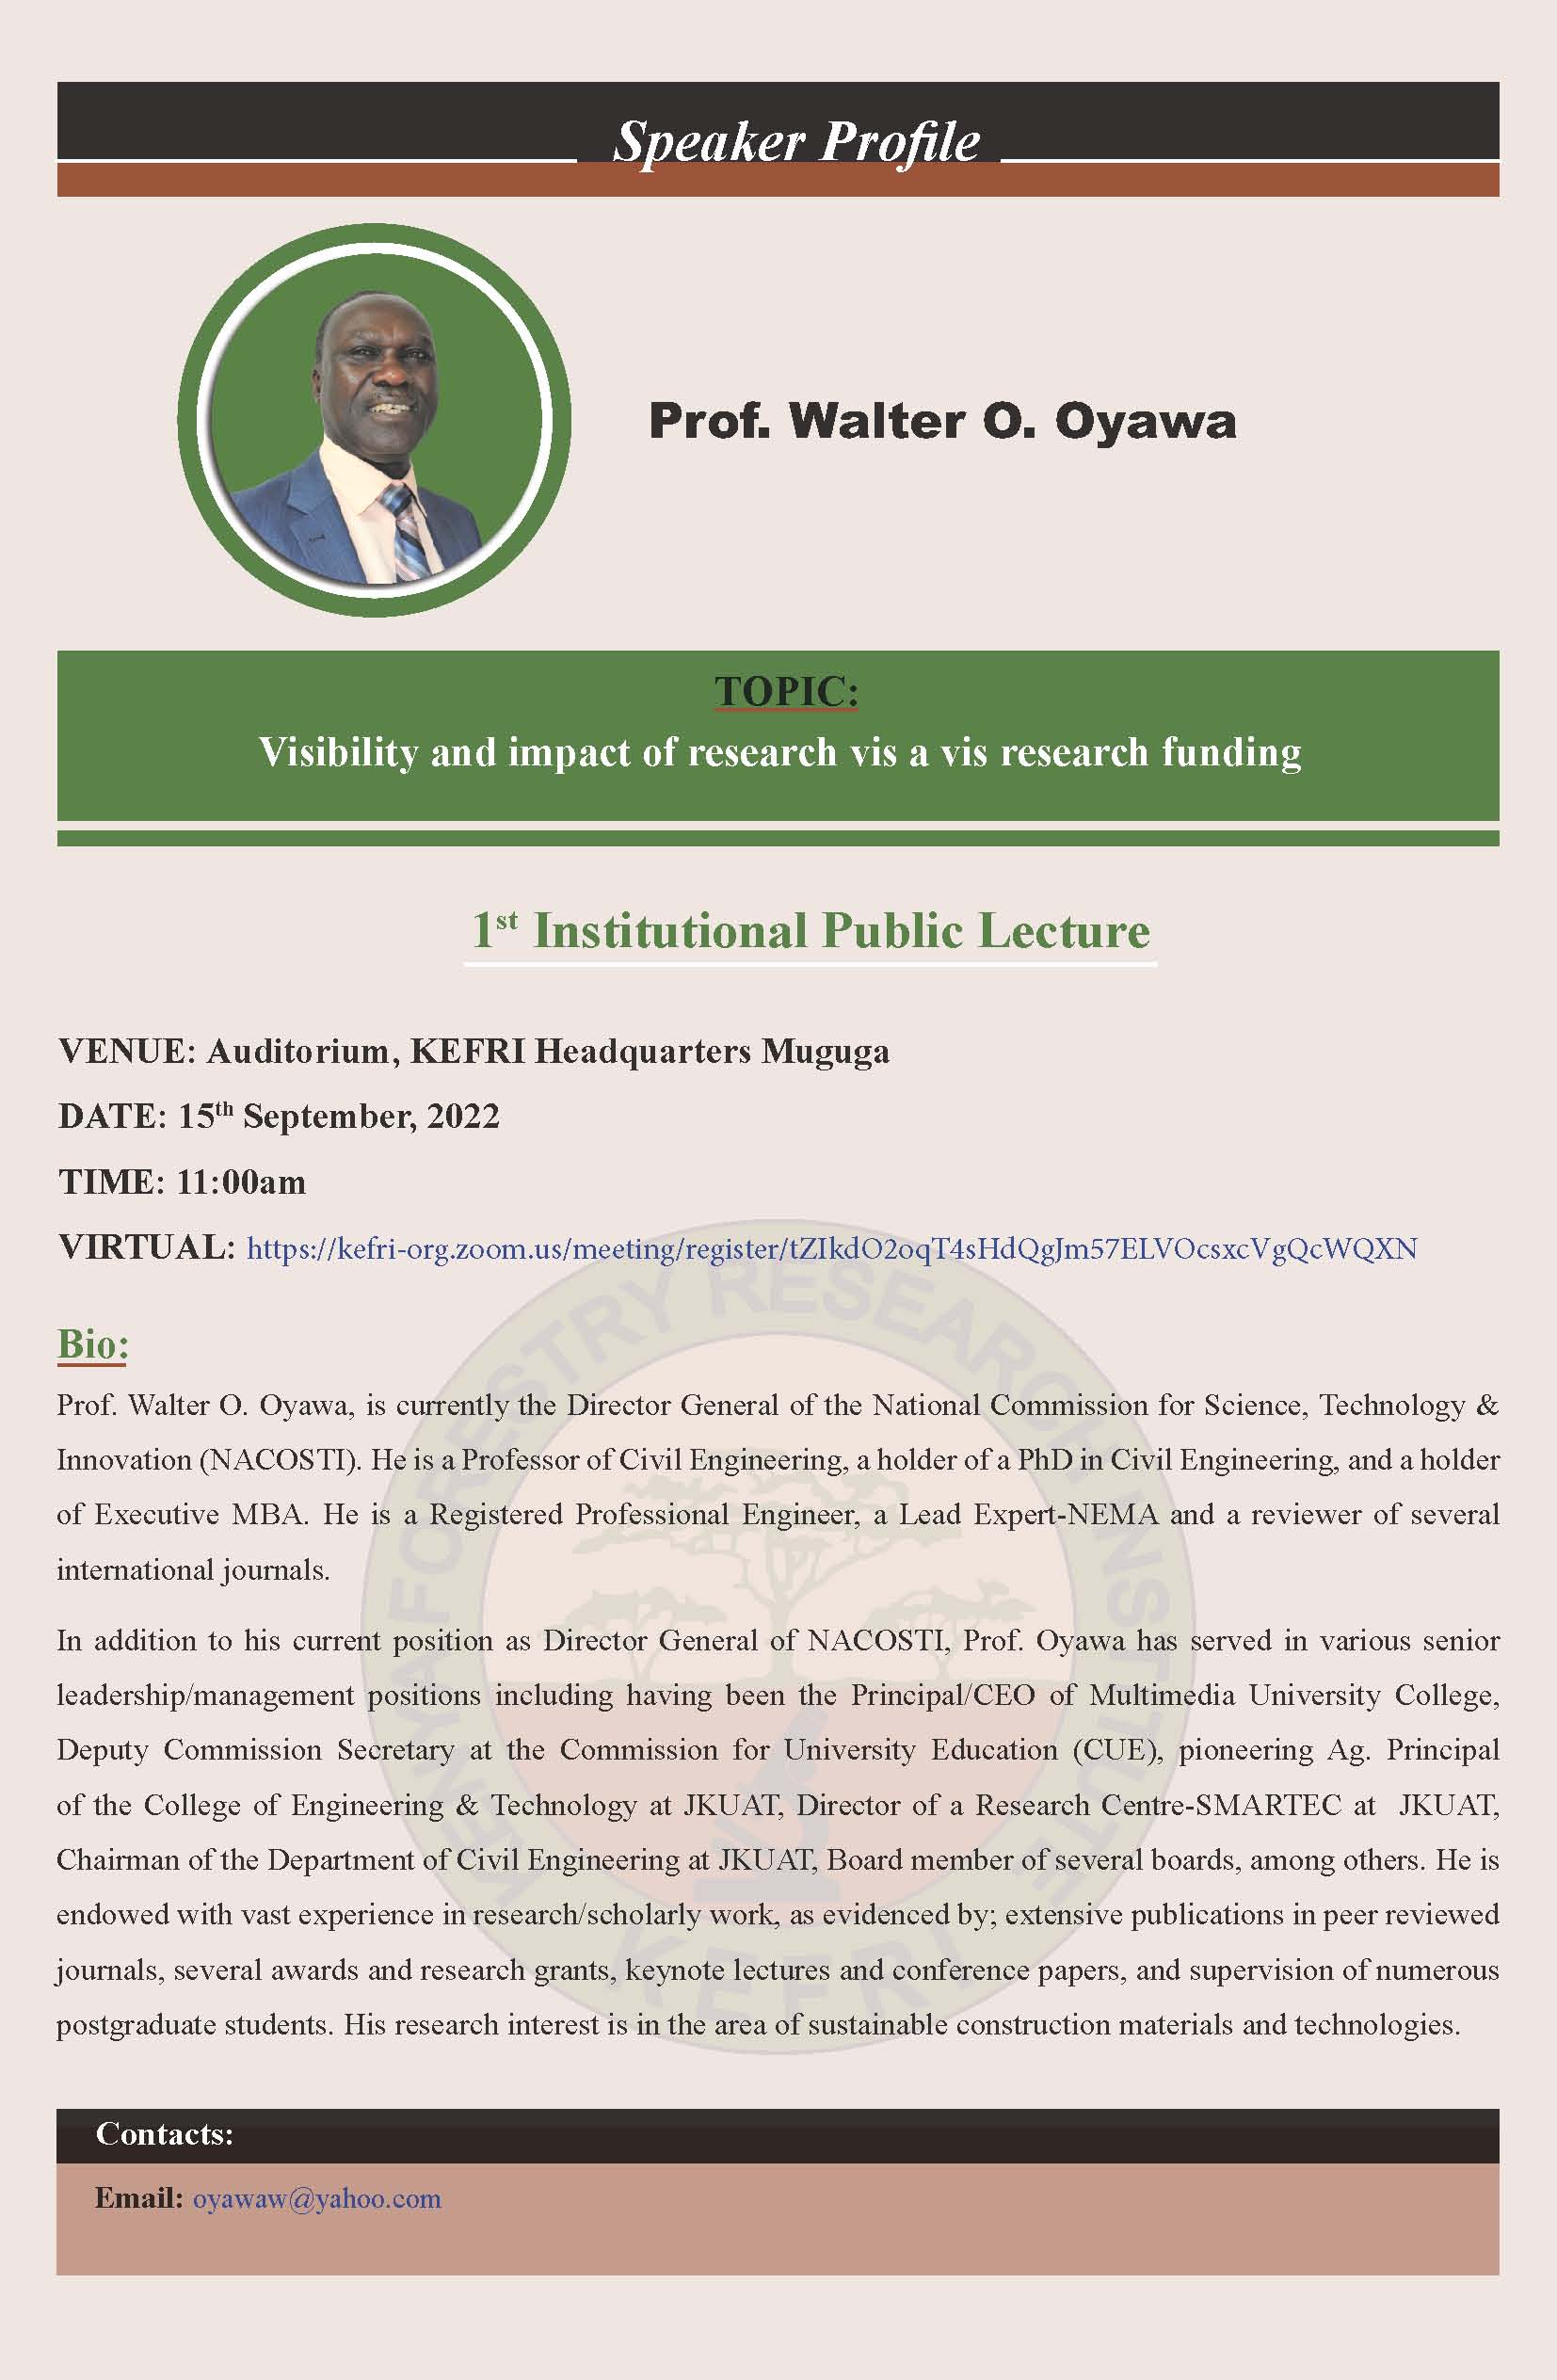 Prof. Oyawa Speaker Profile